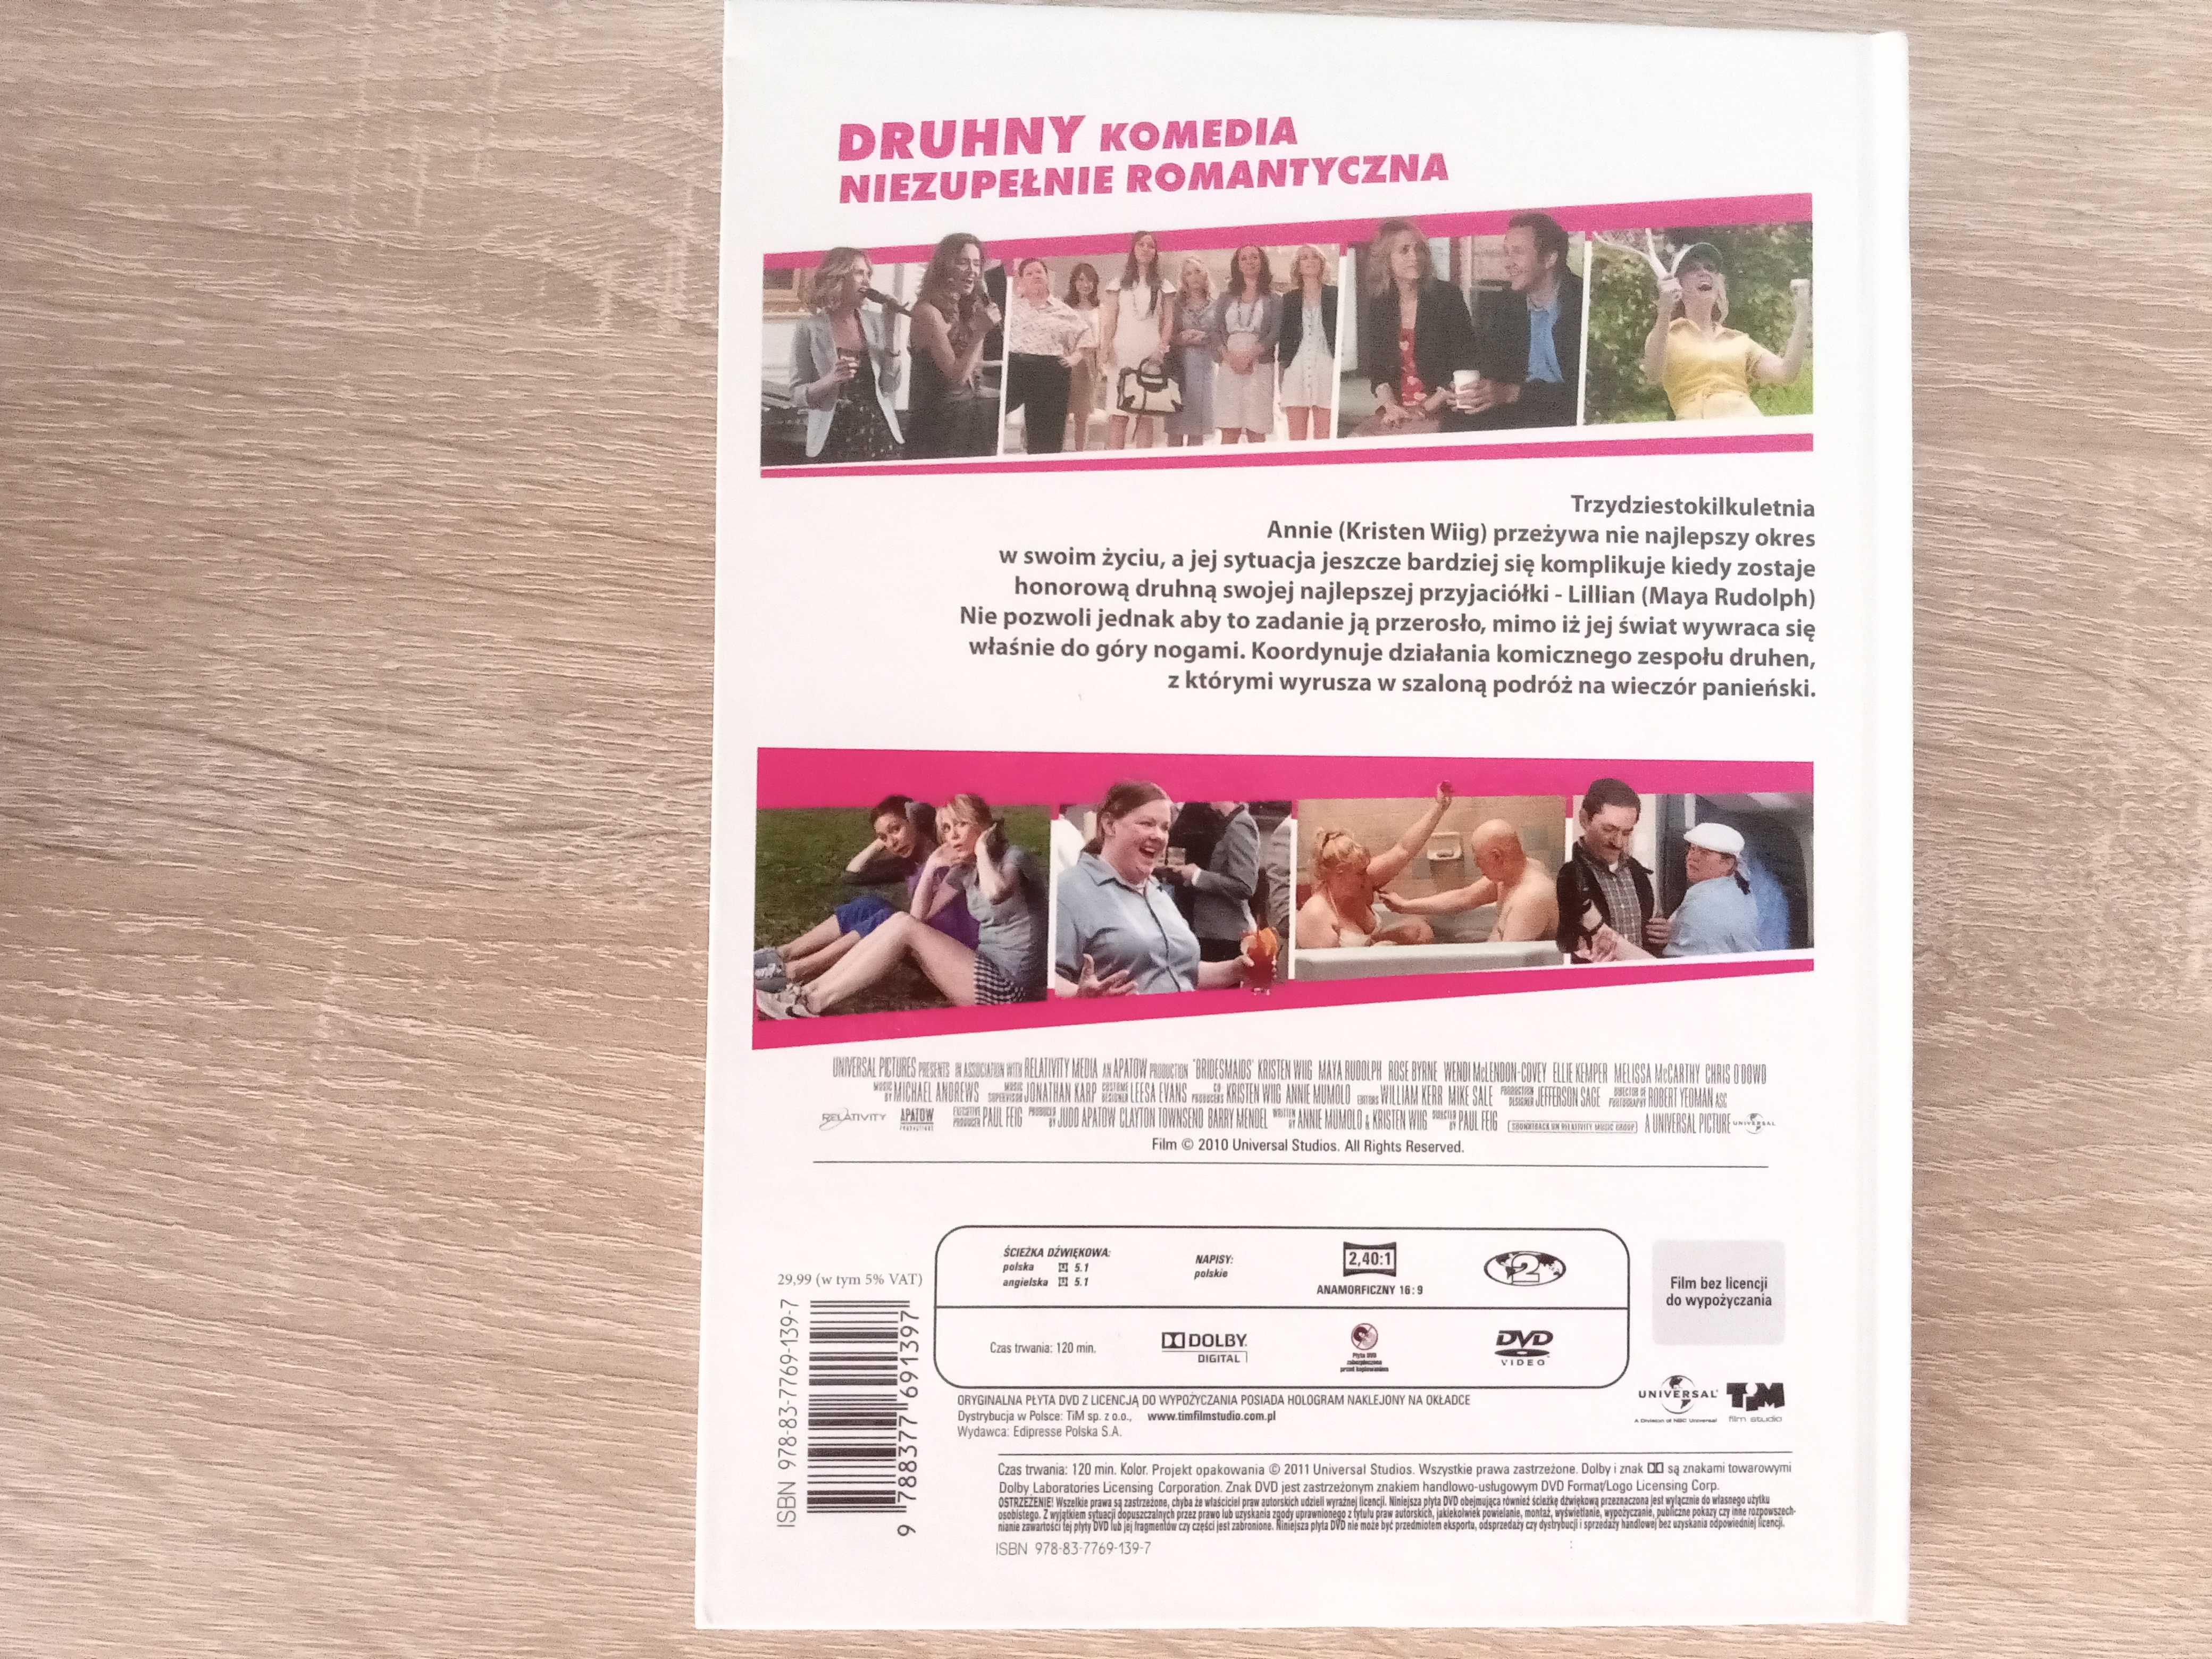 "Druhny" film na DVD